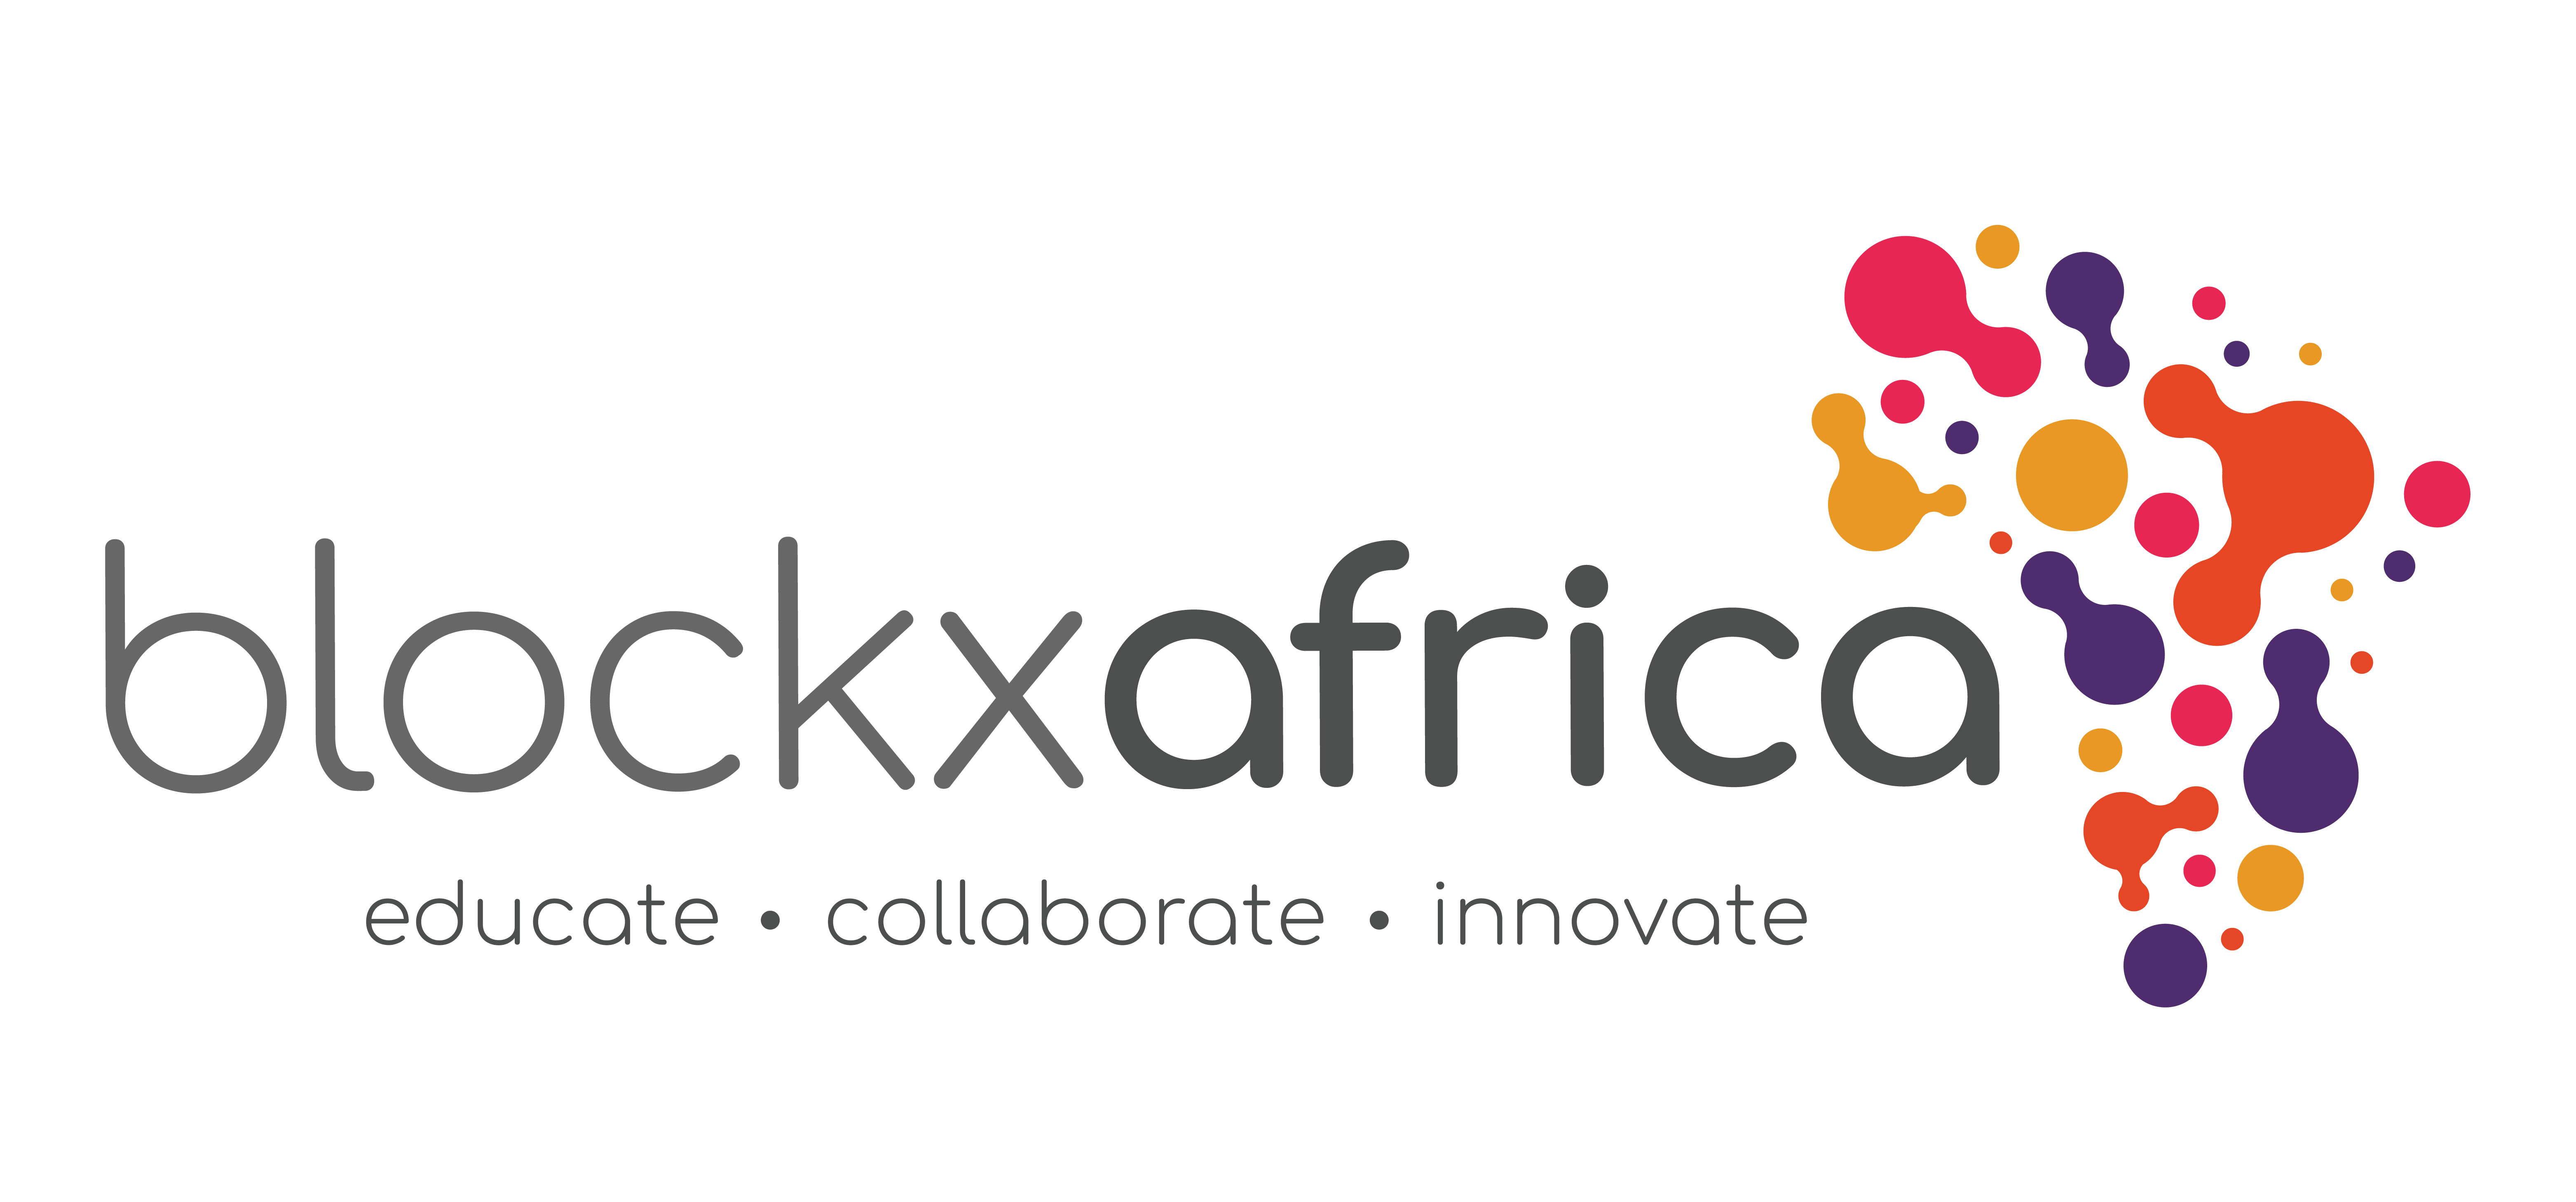 BlockXAfrica